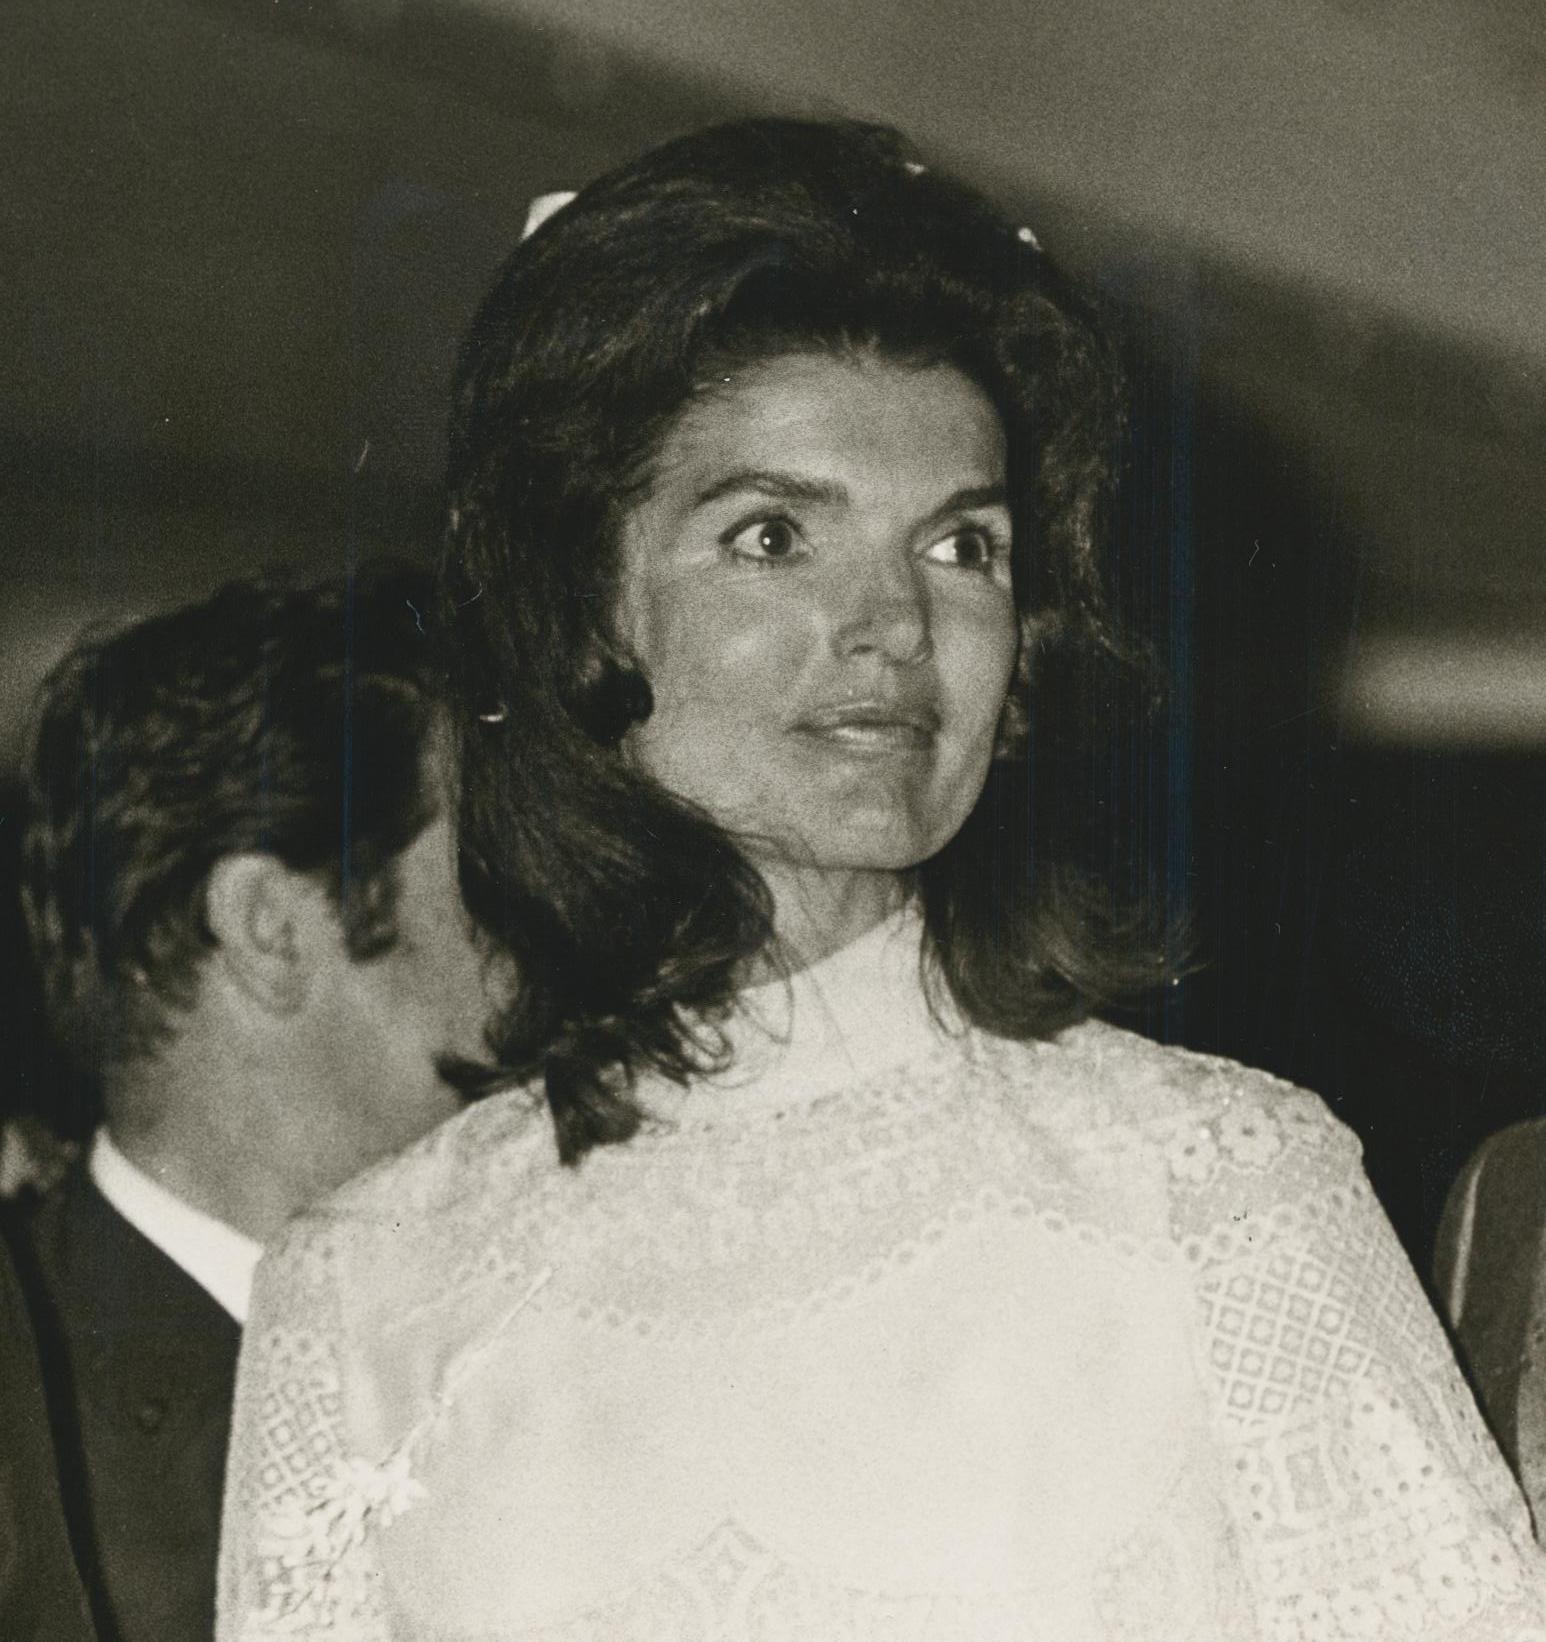 Réception, Jackie Kennedy Onassis, Grèce, 1968, 20,2 x 29,9 cm - Moderne Art par Ron Galella